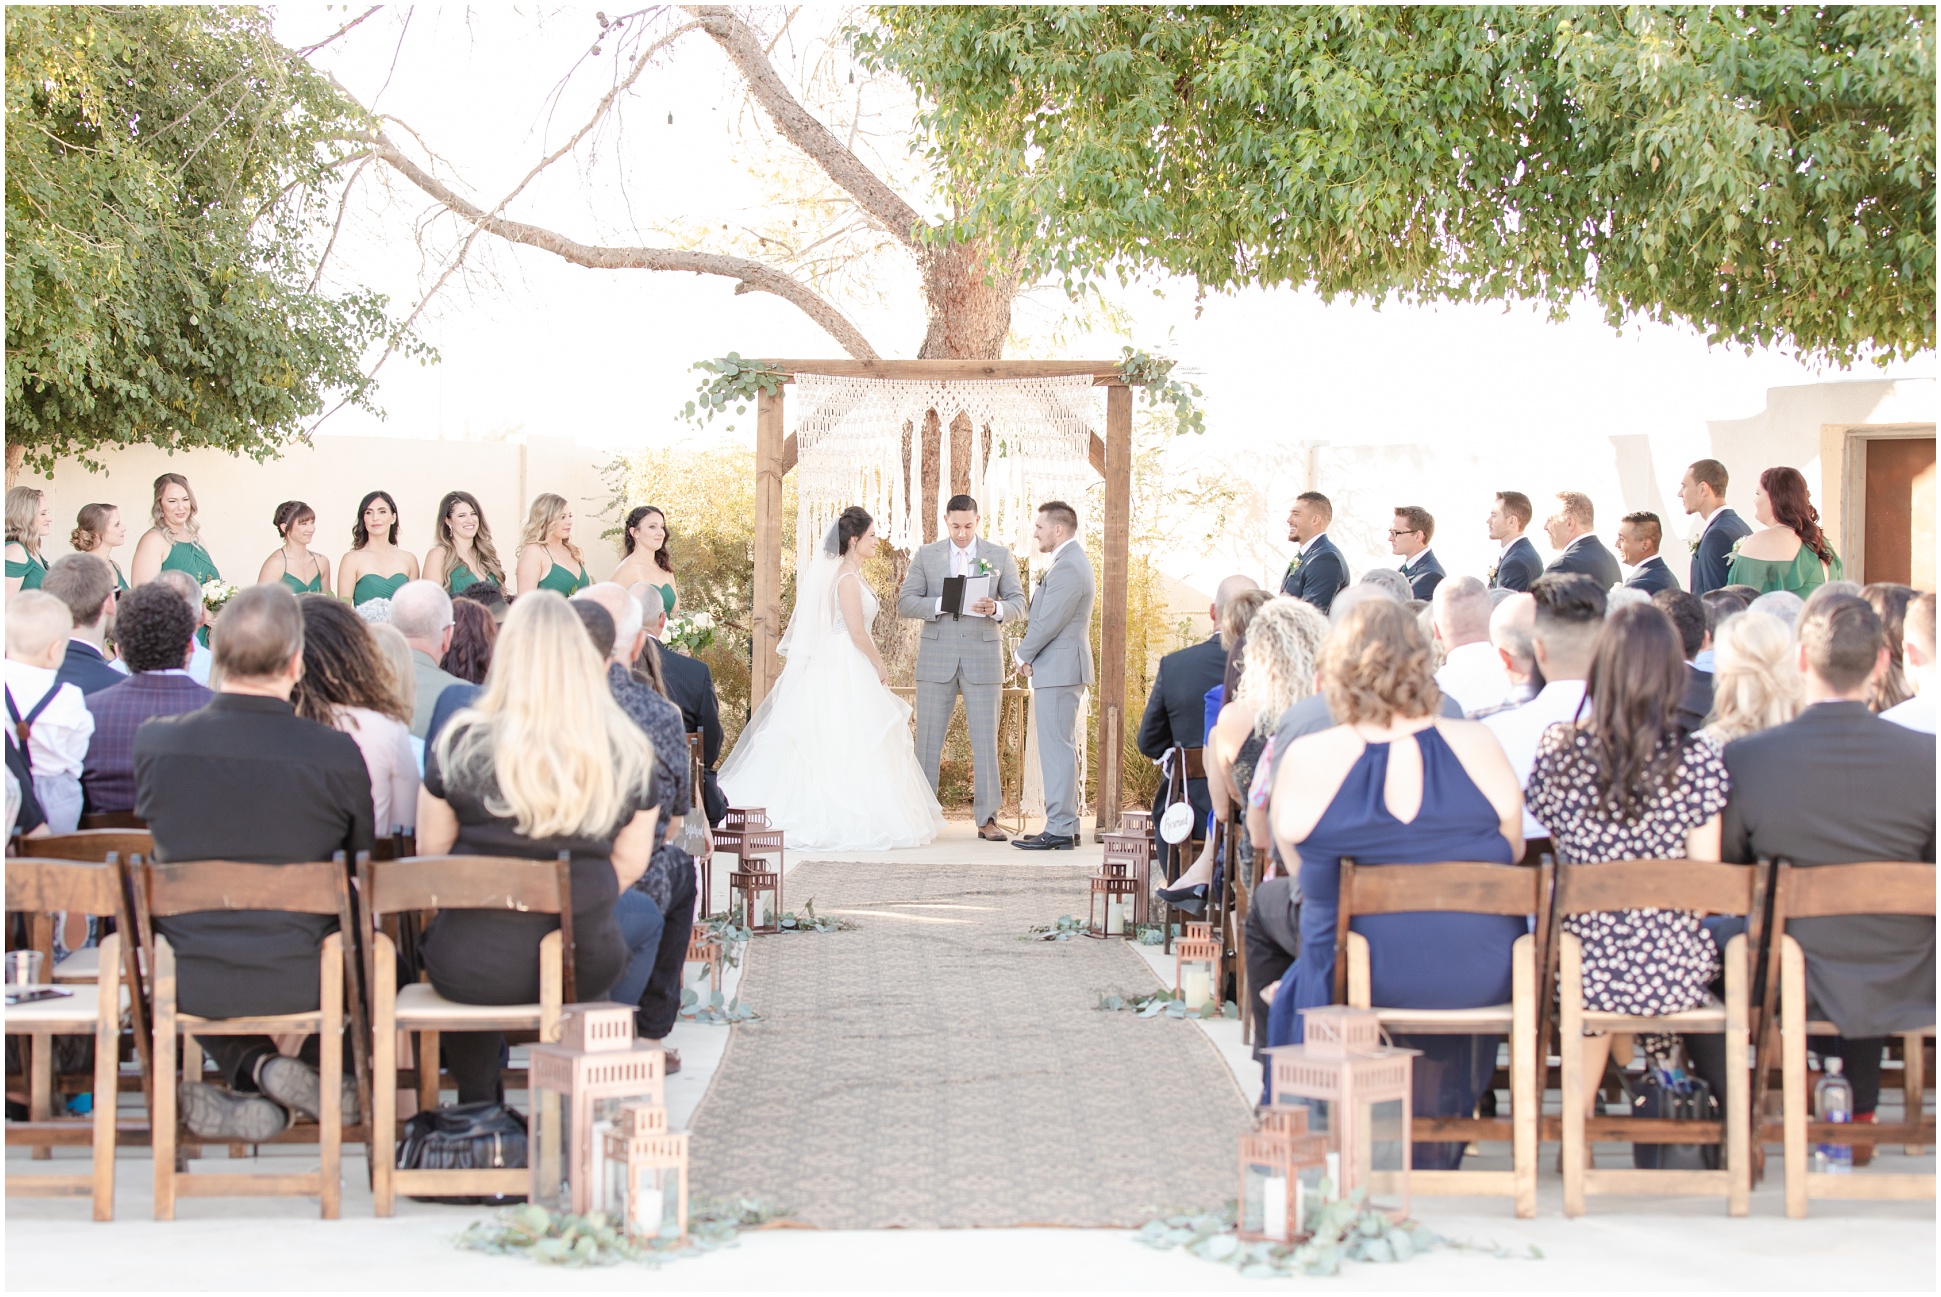 Back shot of wedding ceremony